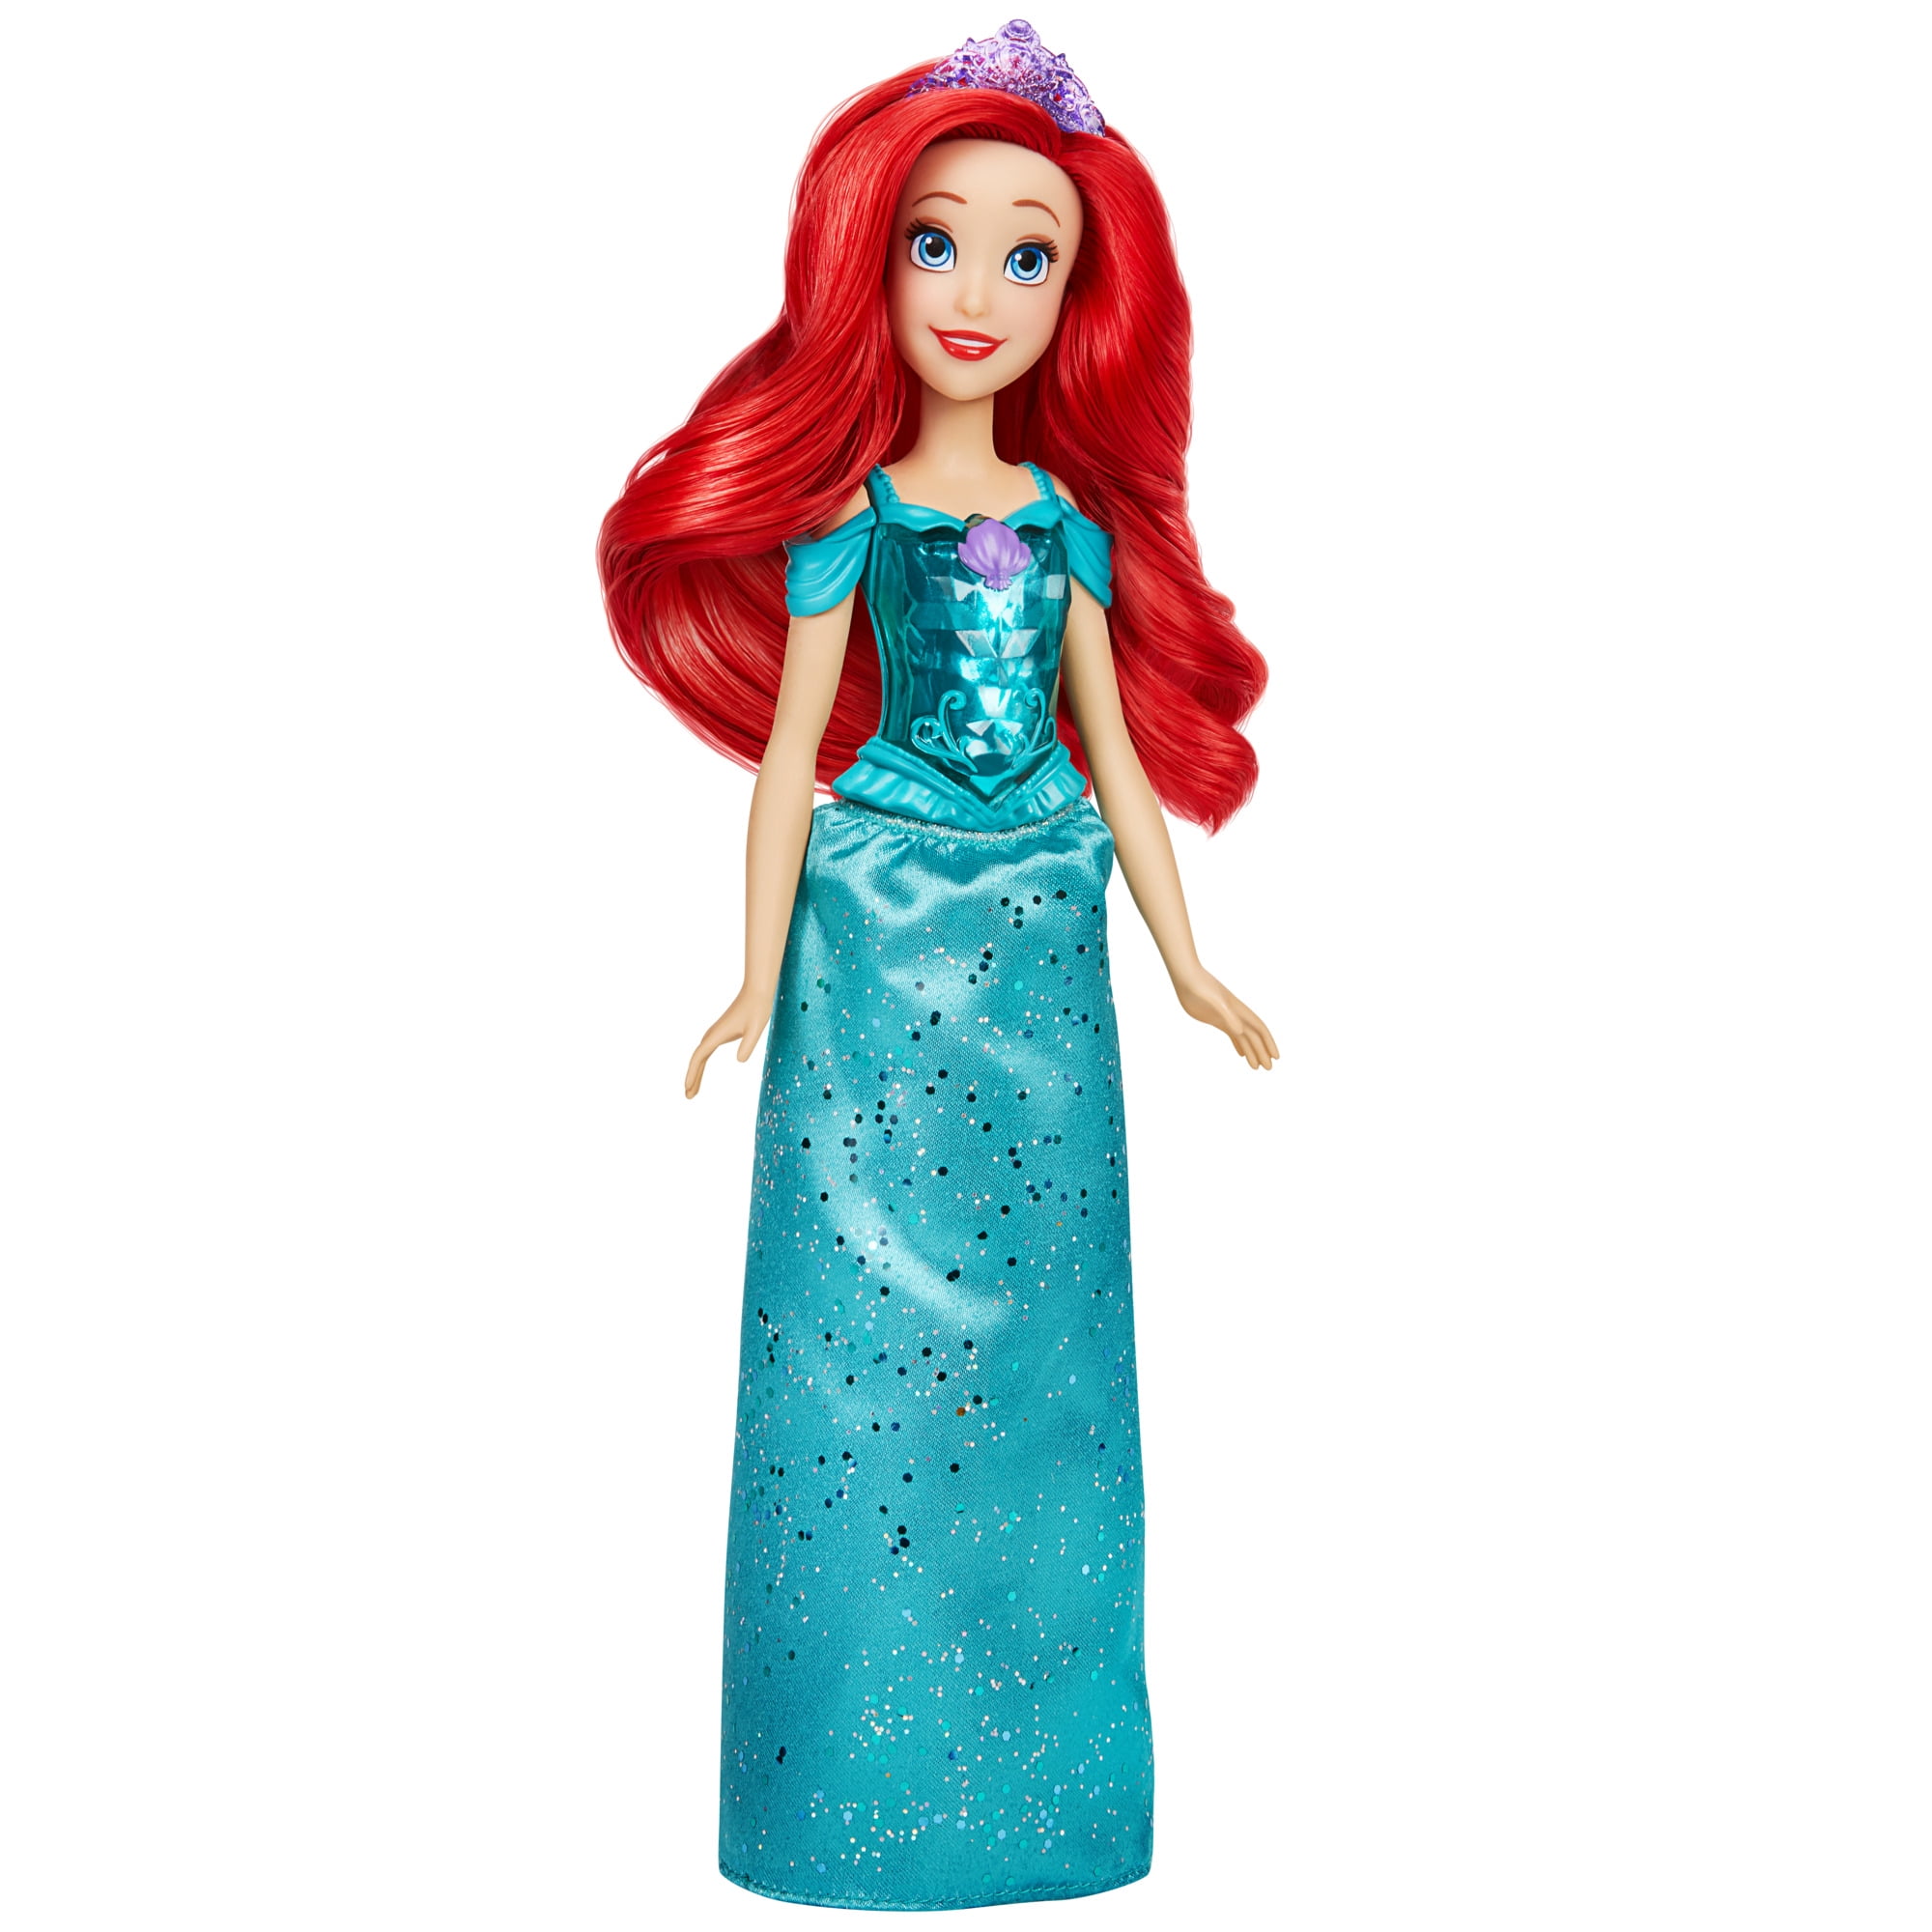 E4156 Disney Princess Royal Shimmer Ariel poupée * NEUF * 